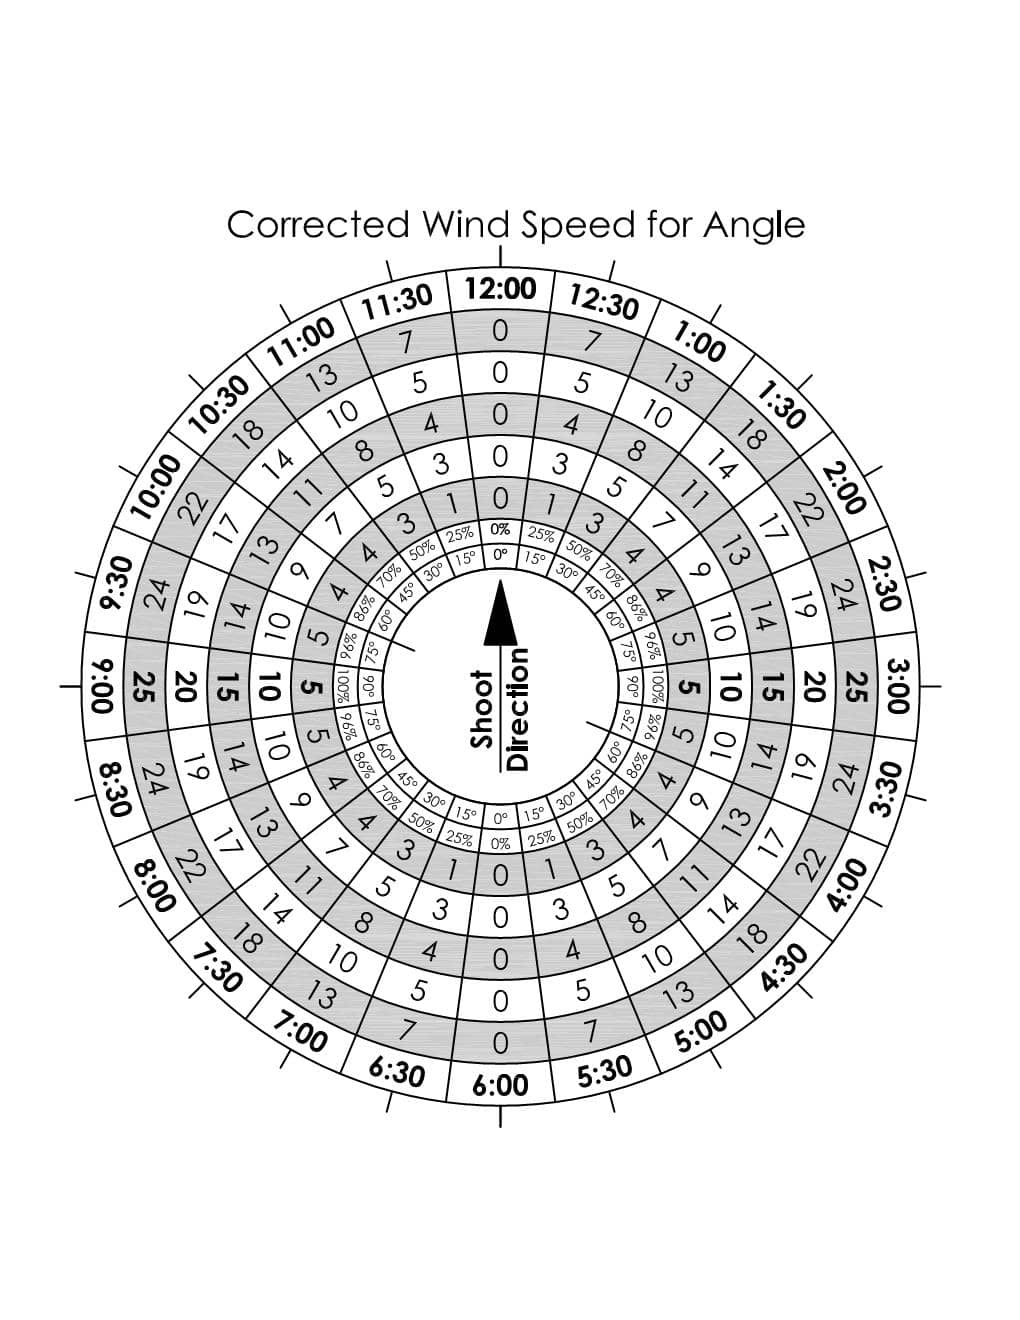 Cosine of the Wind Angle 